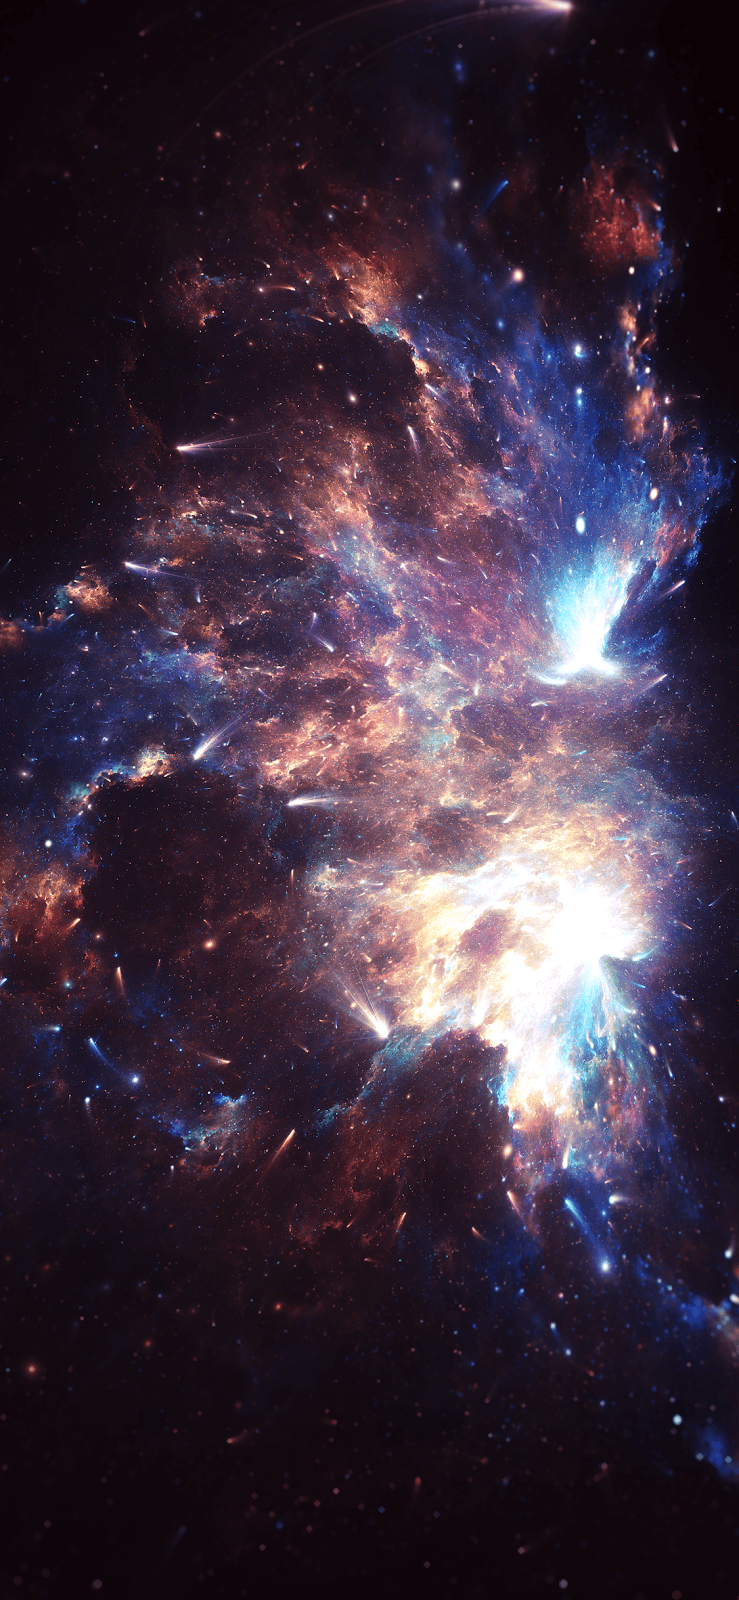 Colorful Nebula (iPhone X). iPhone wallpaper nebula, Wallpaper space, Android wallpaper space